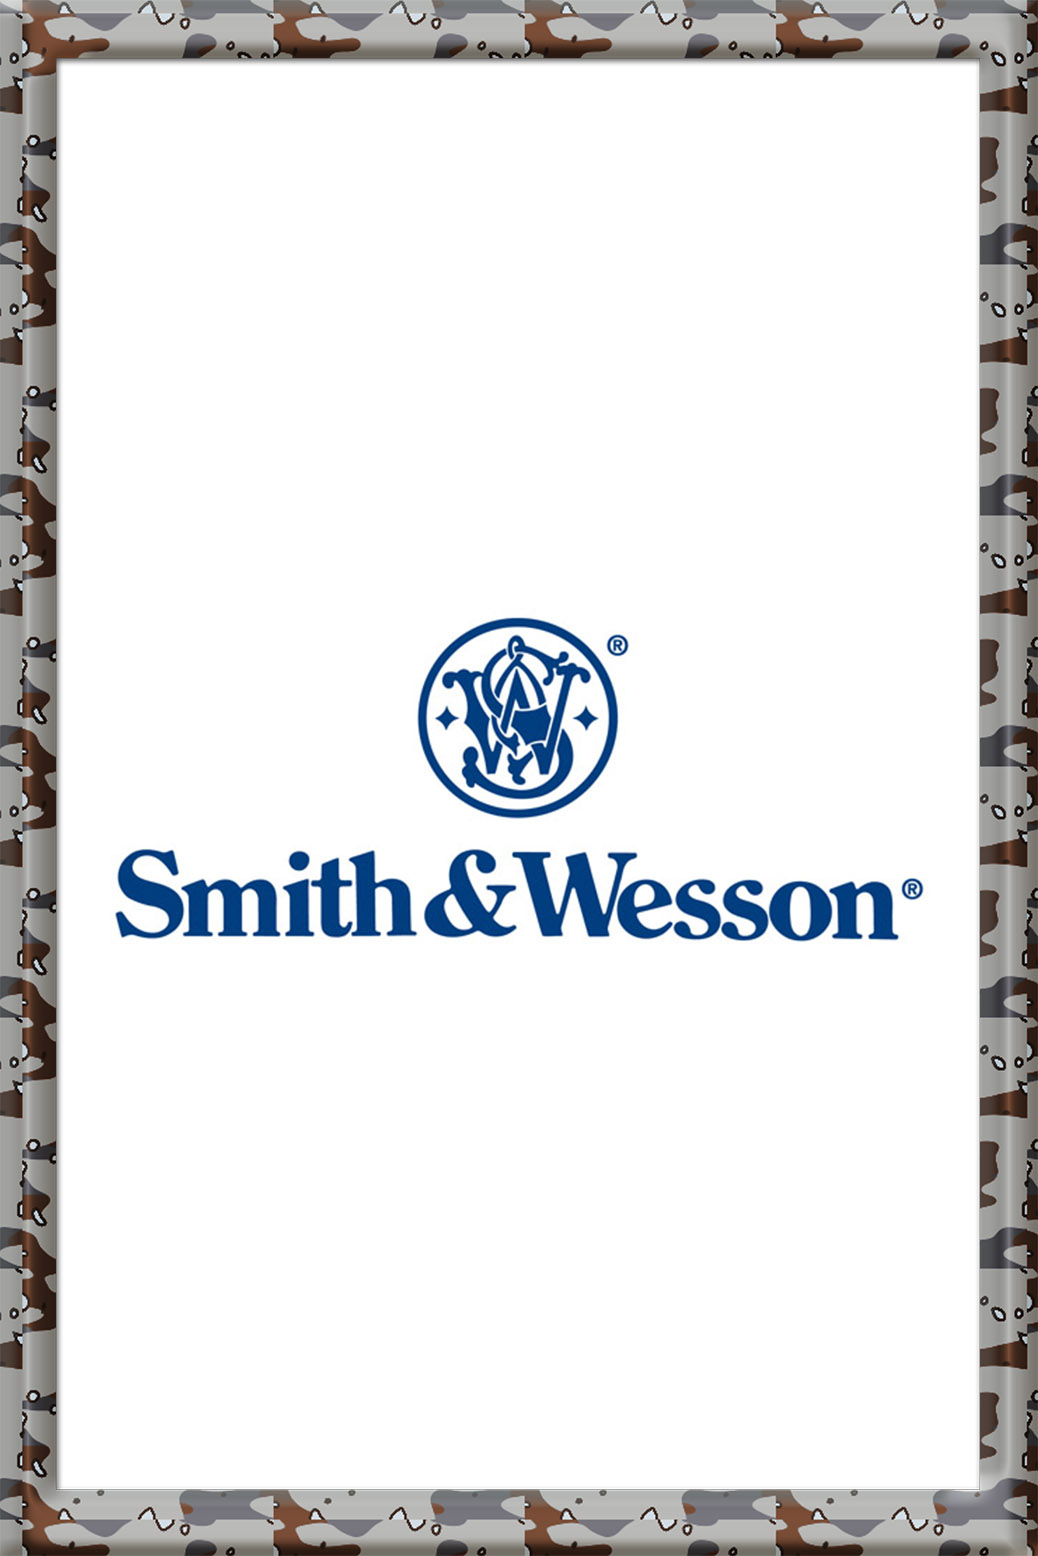 Prova Smith & Wesson